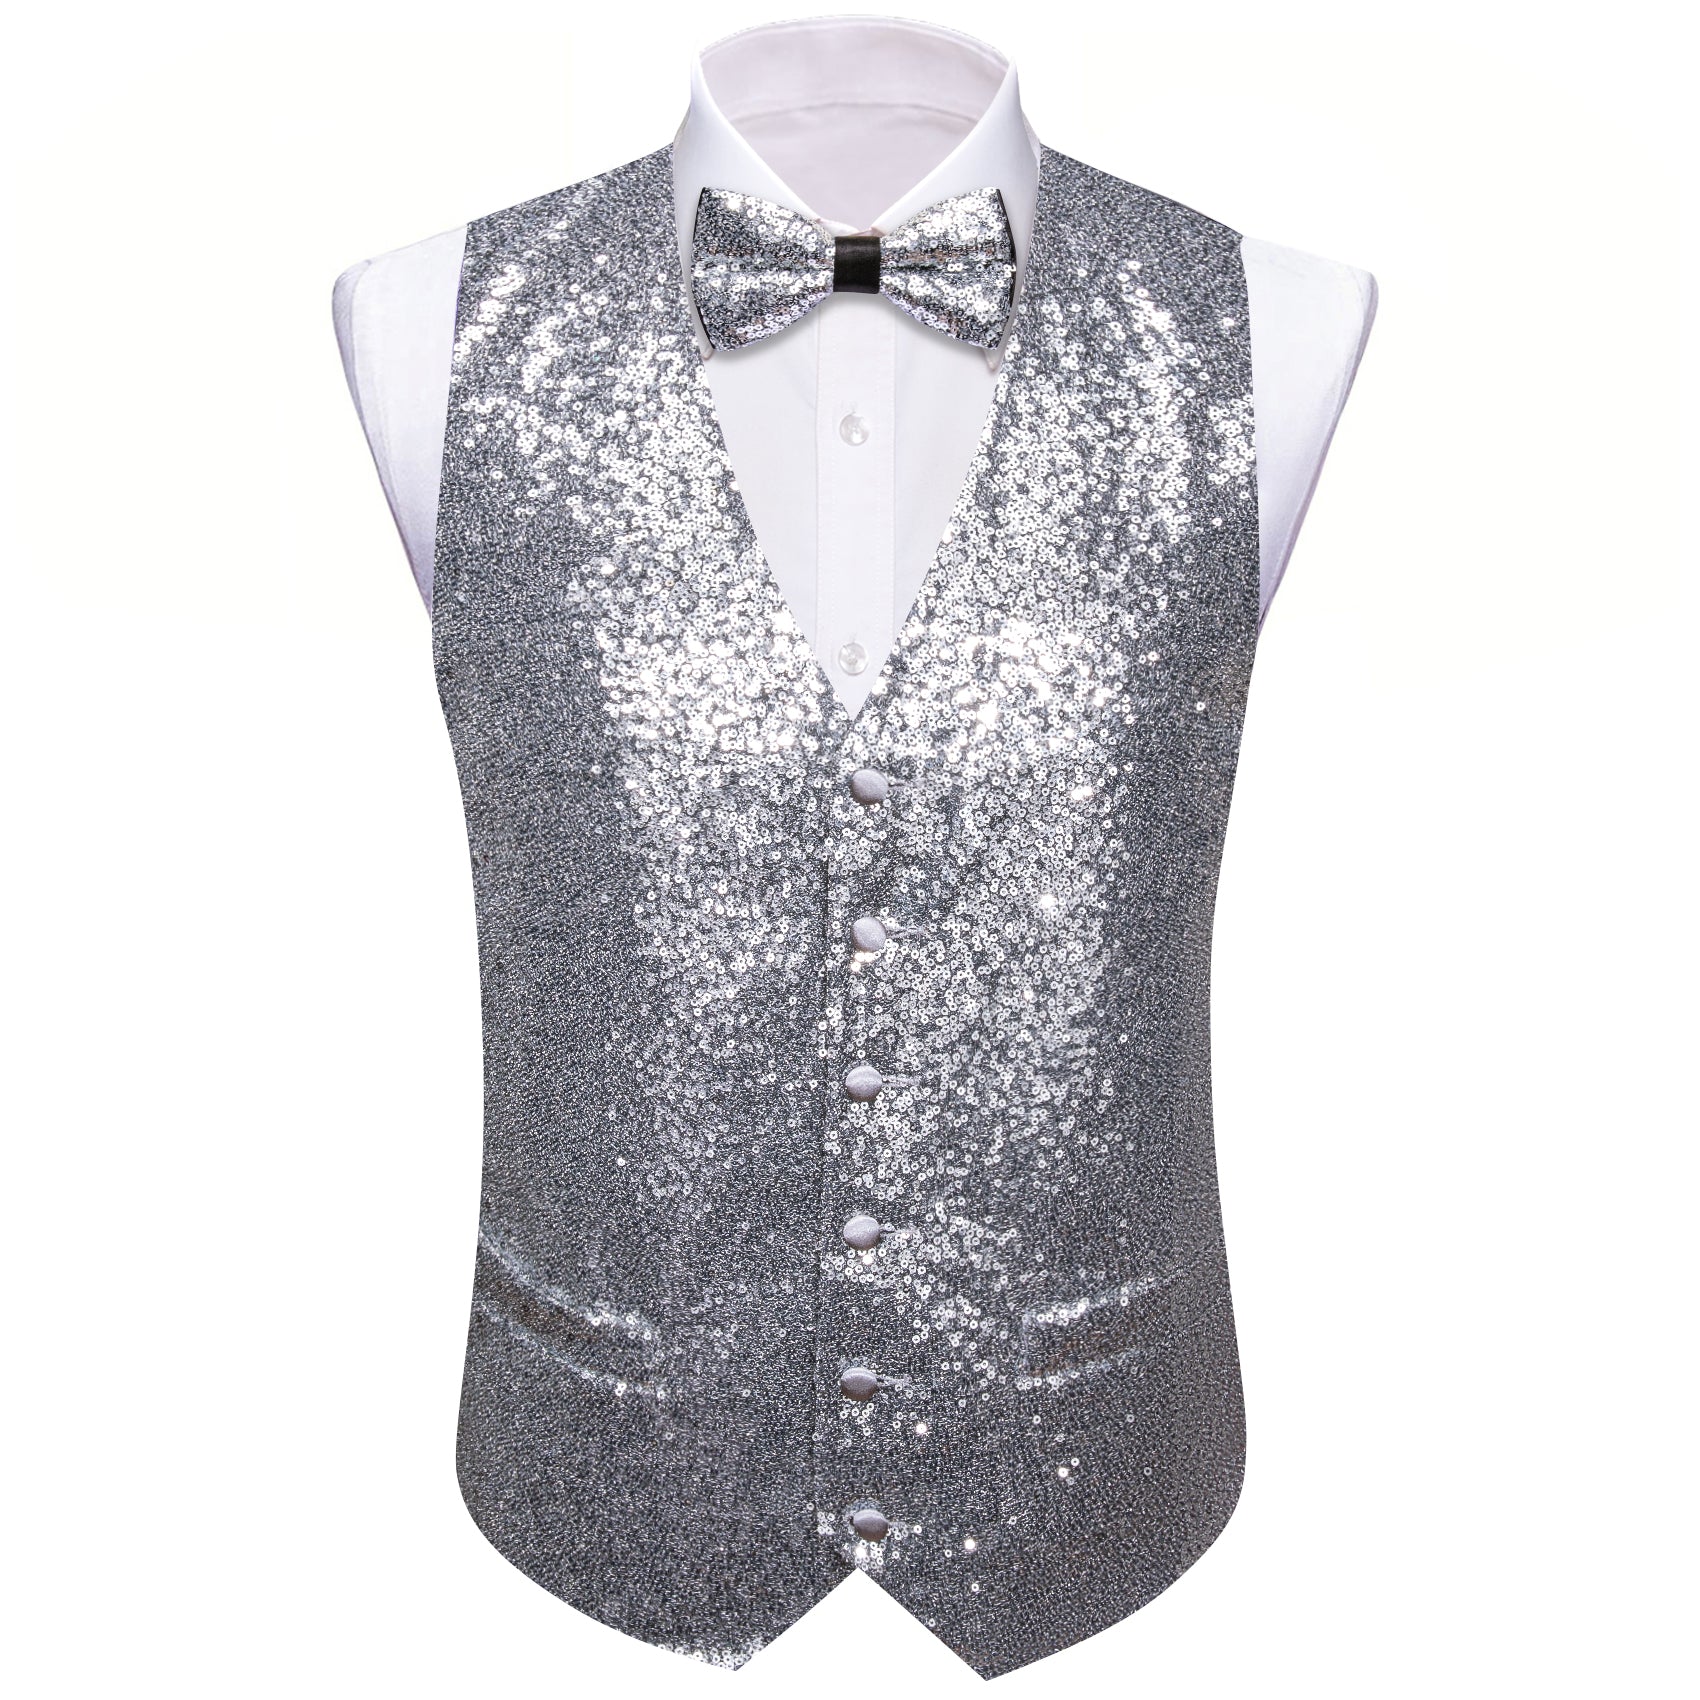 Barry.wang Men's Vest Shining Silver Bow tie Waistcoat Vest Set for Men